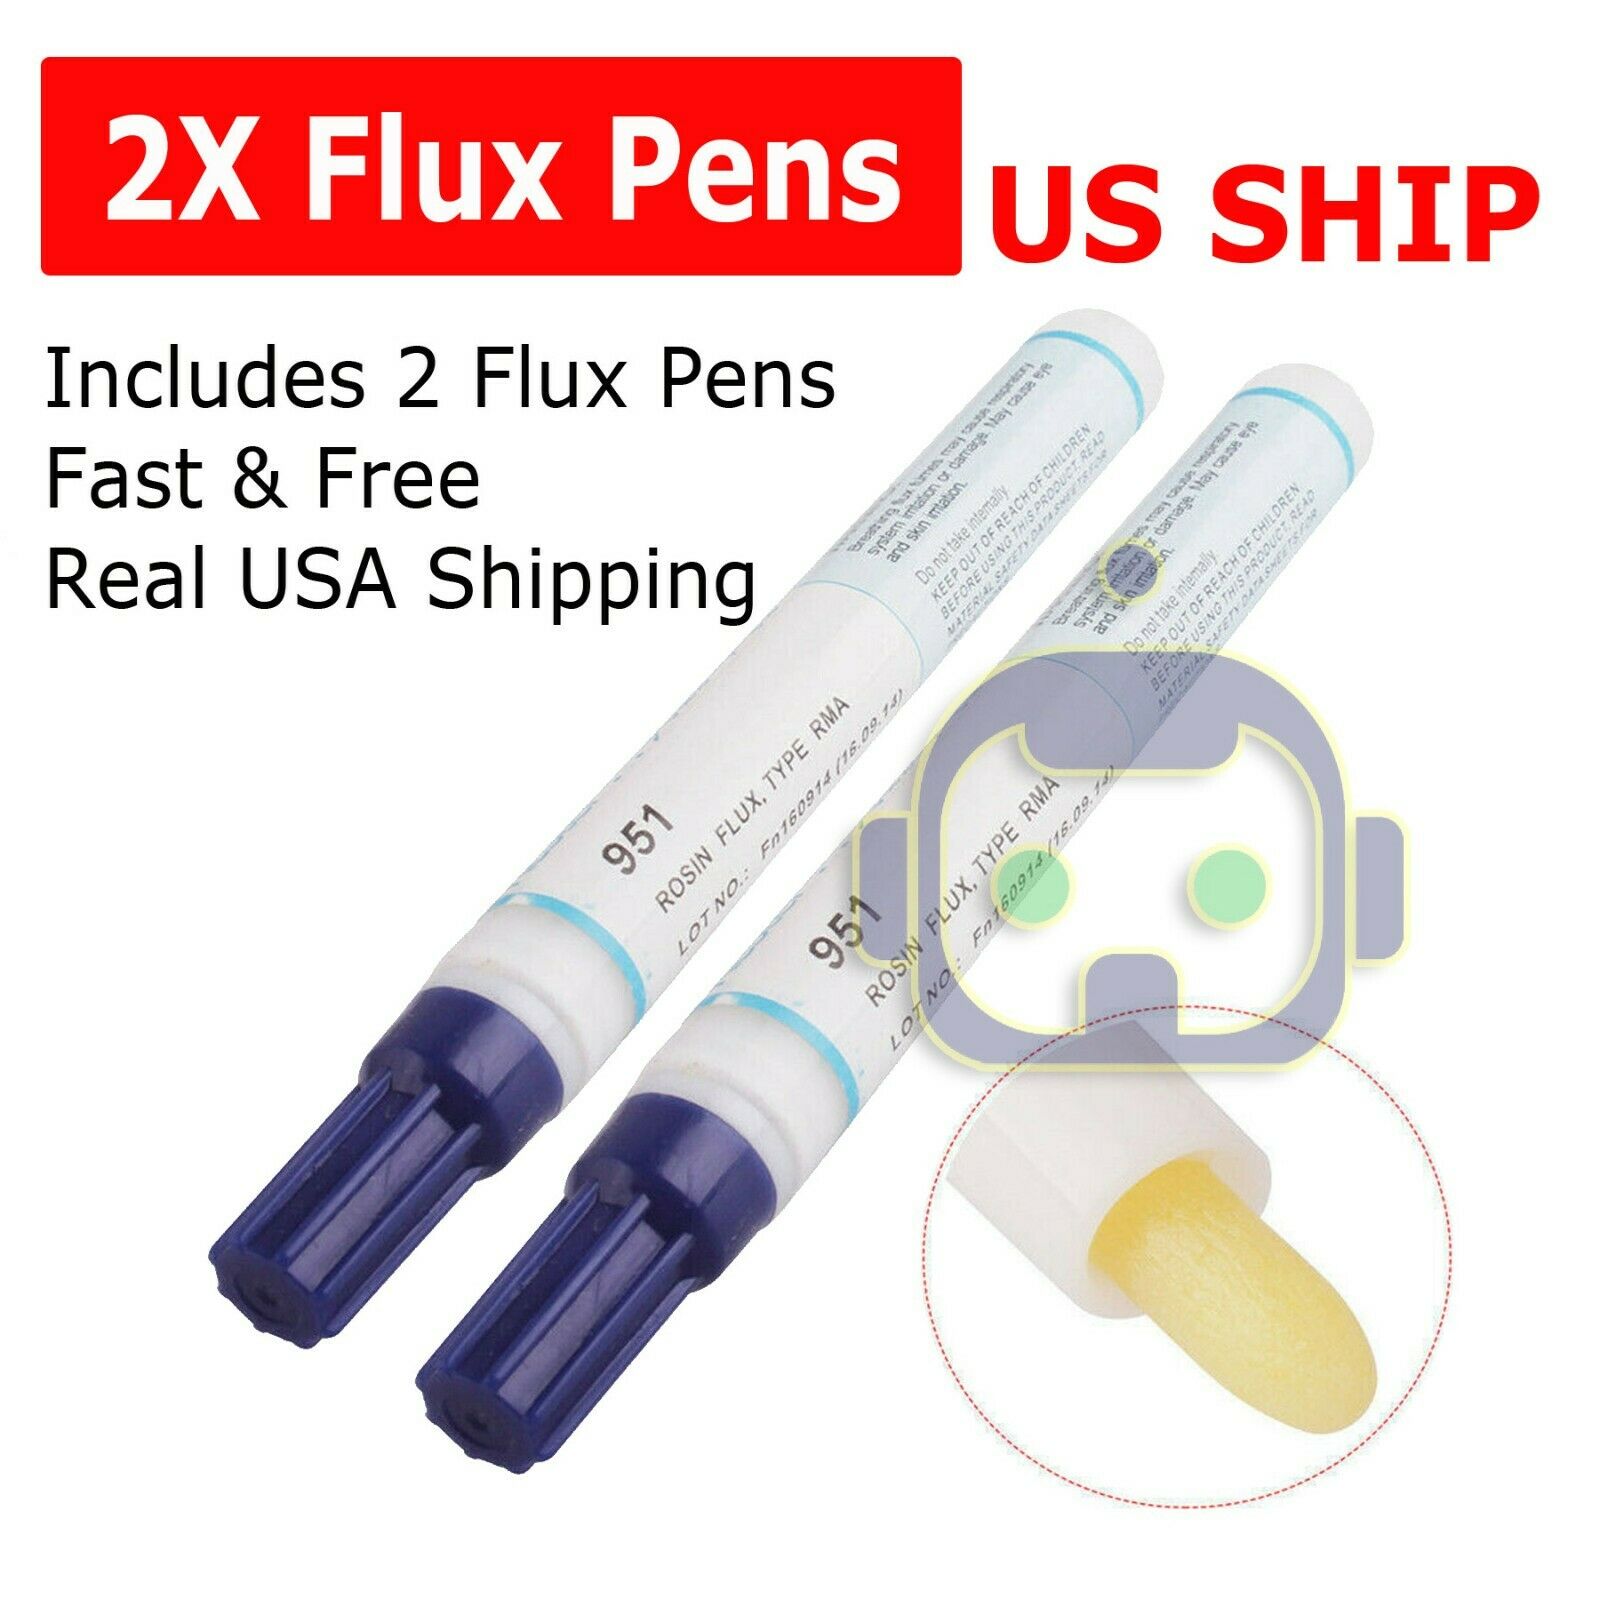 2X 951 Soldering Flux Pen Low Solids No Clean 10ml for PCB & Solar Cells US